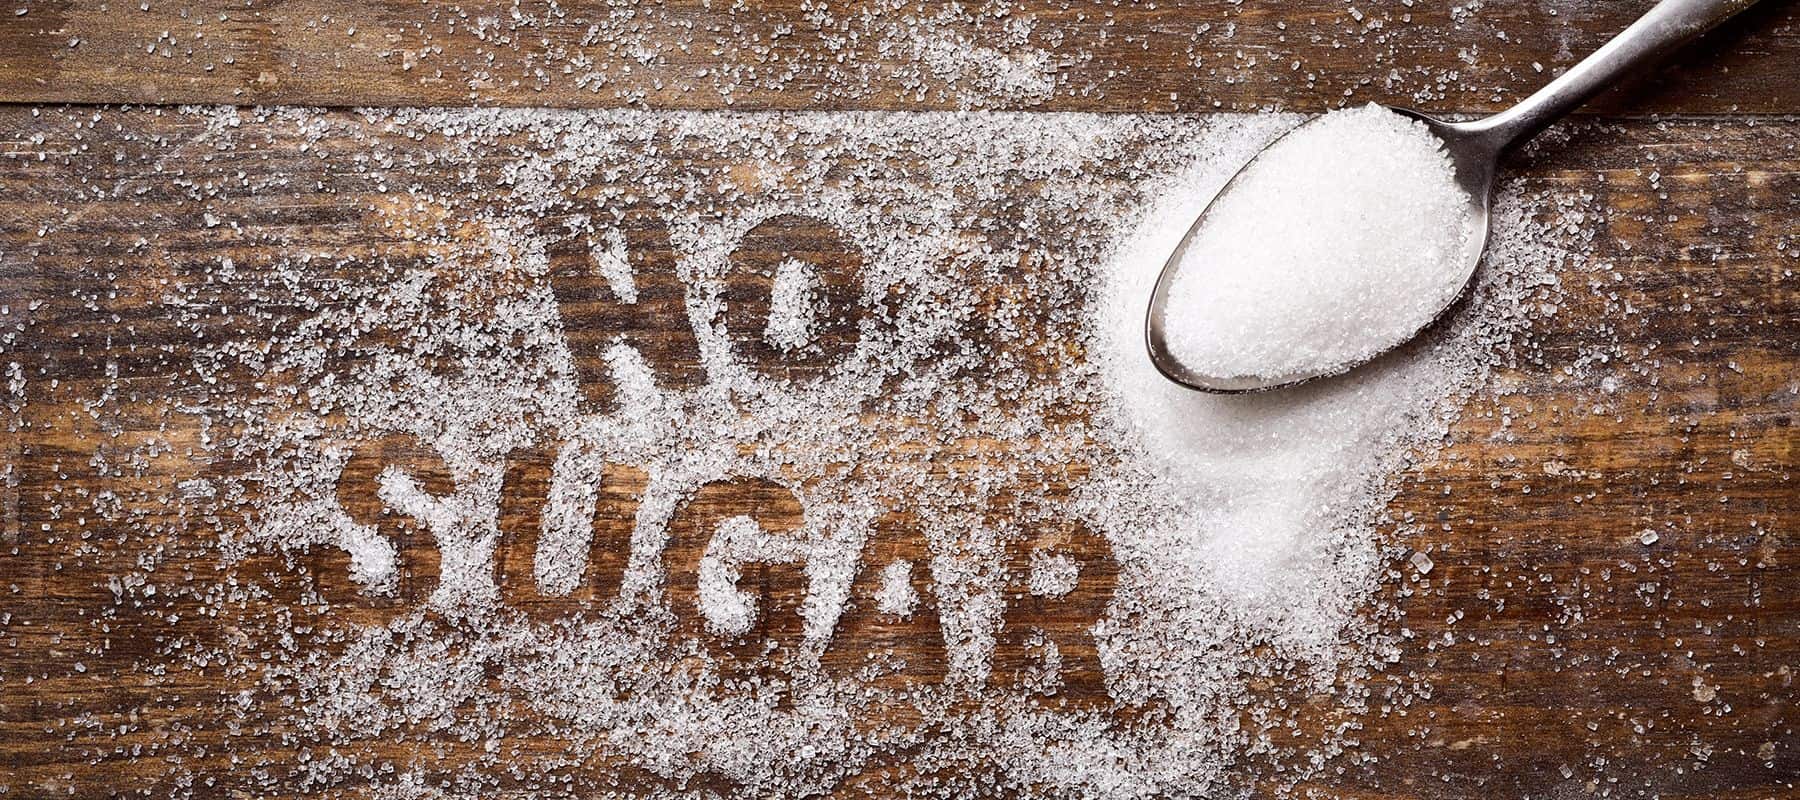 Zucker Alternativen